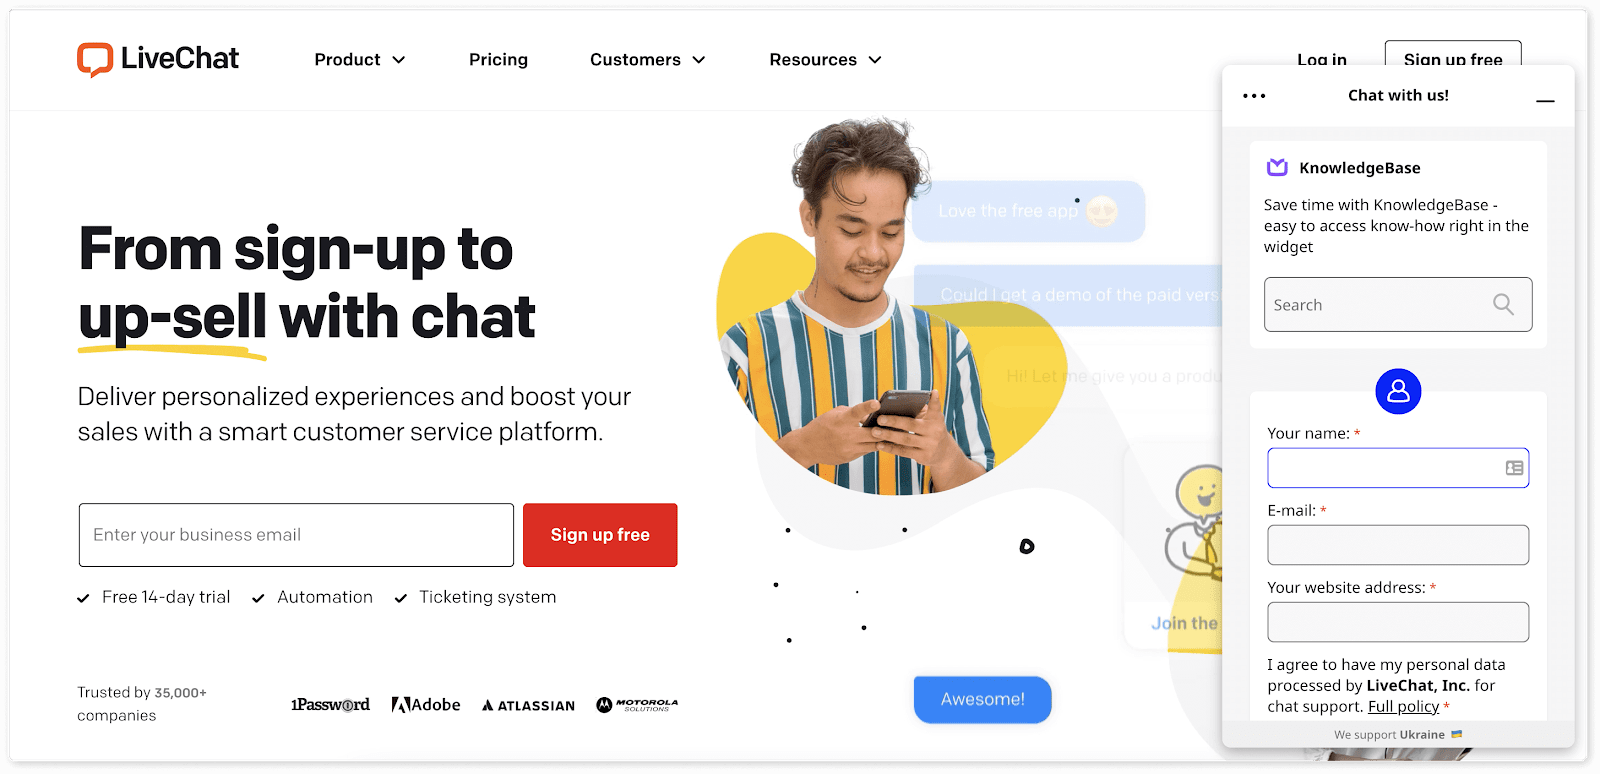 livechat customer service software landing page screenshot